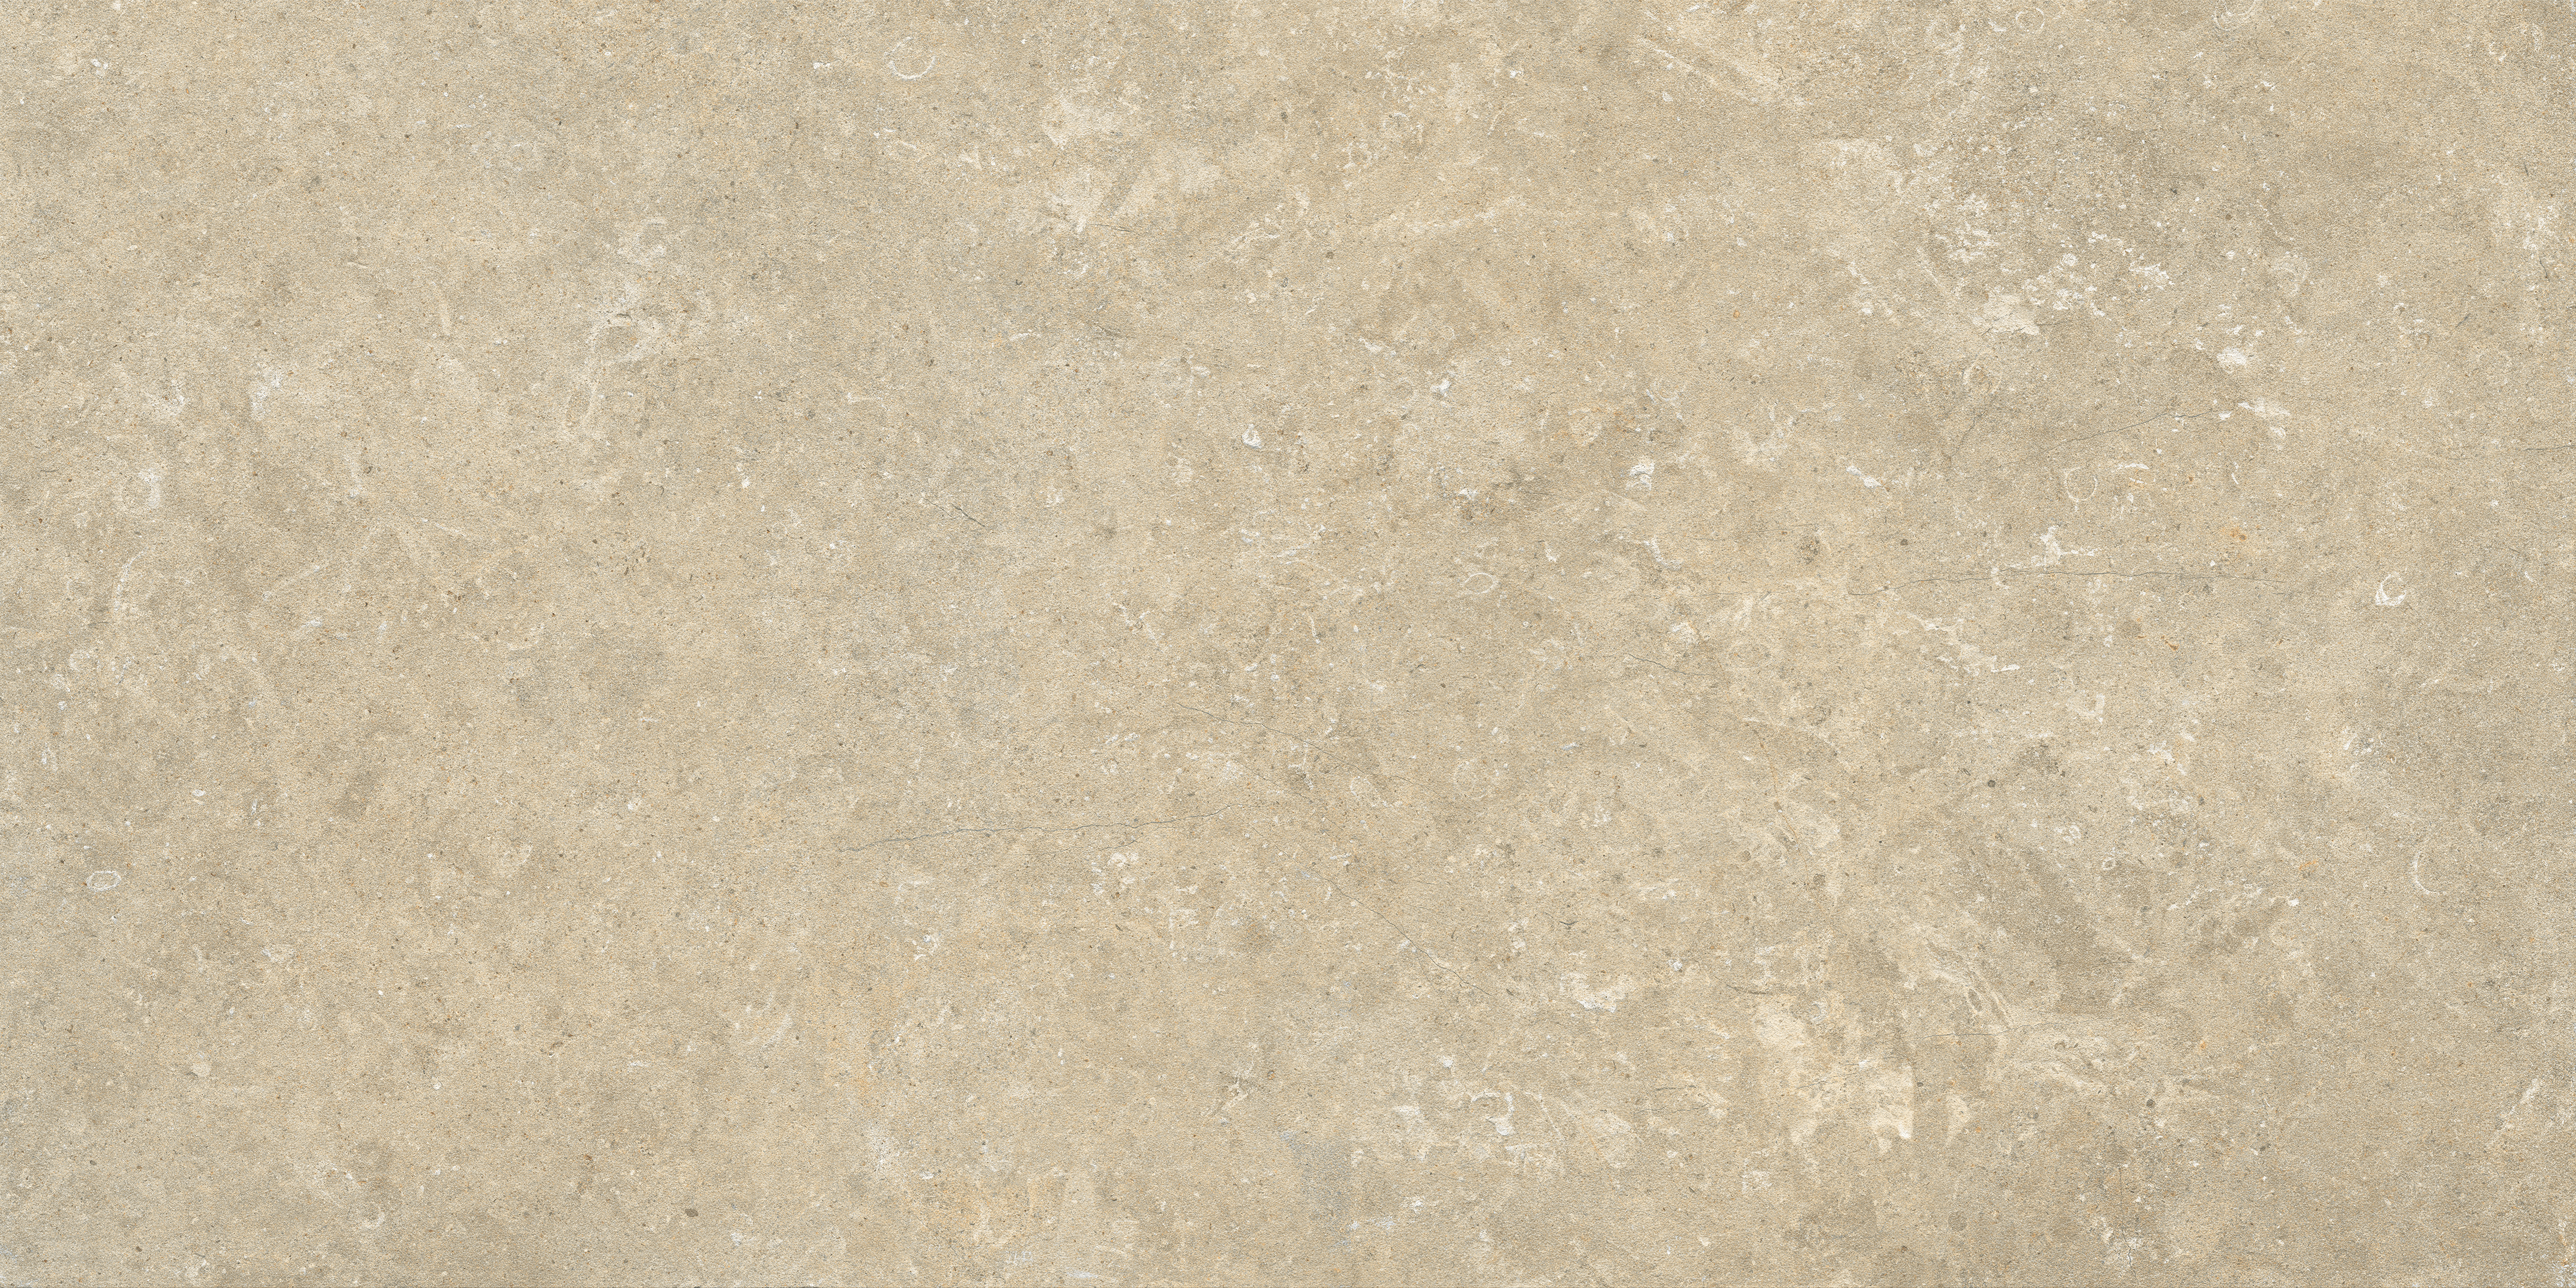 Marca Corona Arkistyle Sand Naturale – Matt J212 naturale – matt 60x120cm rectified 9mm